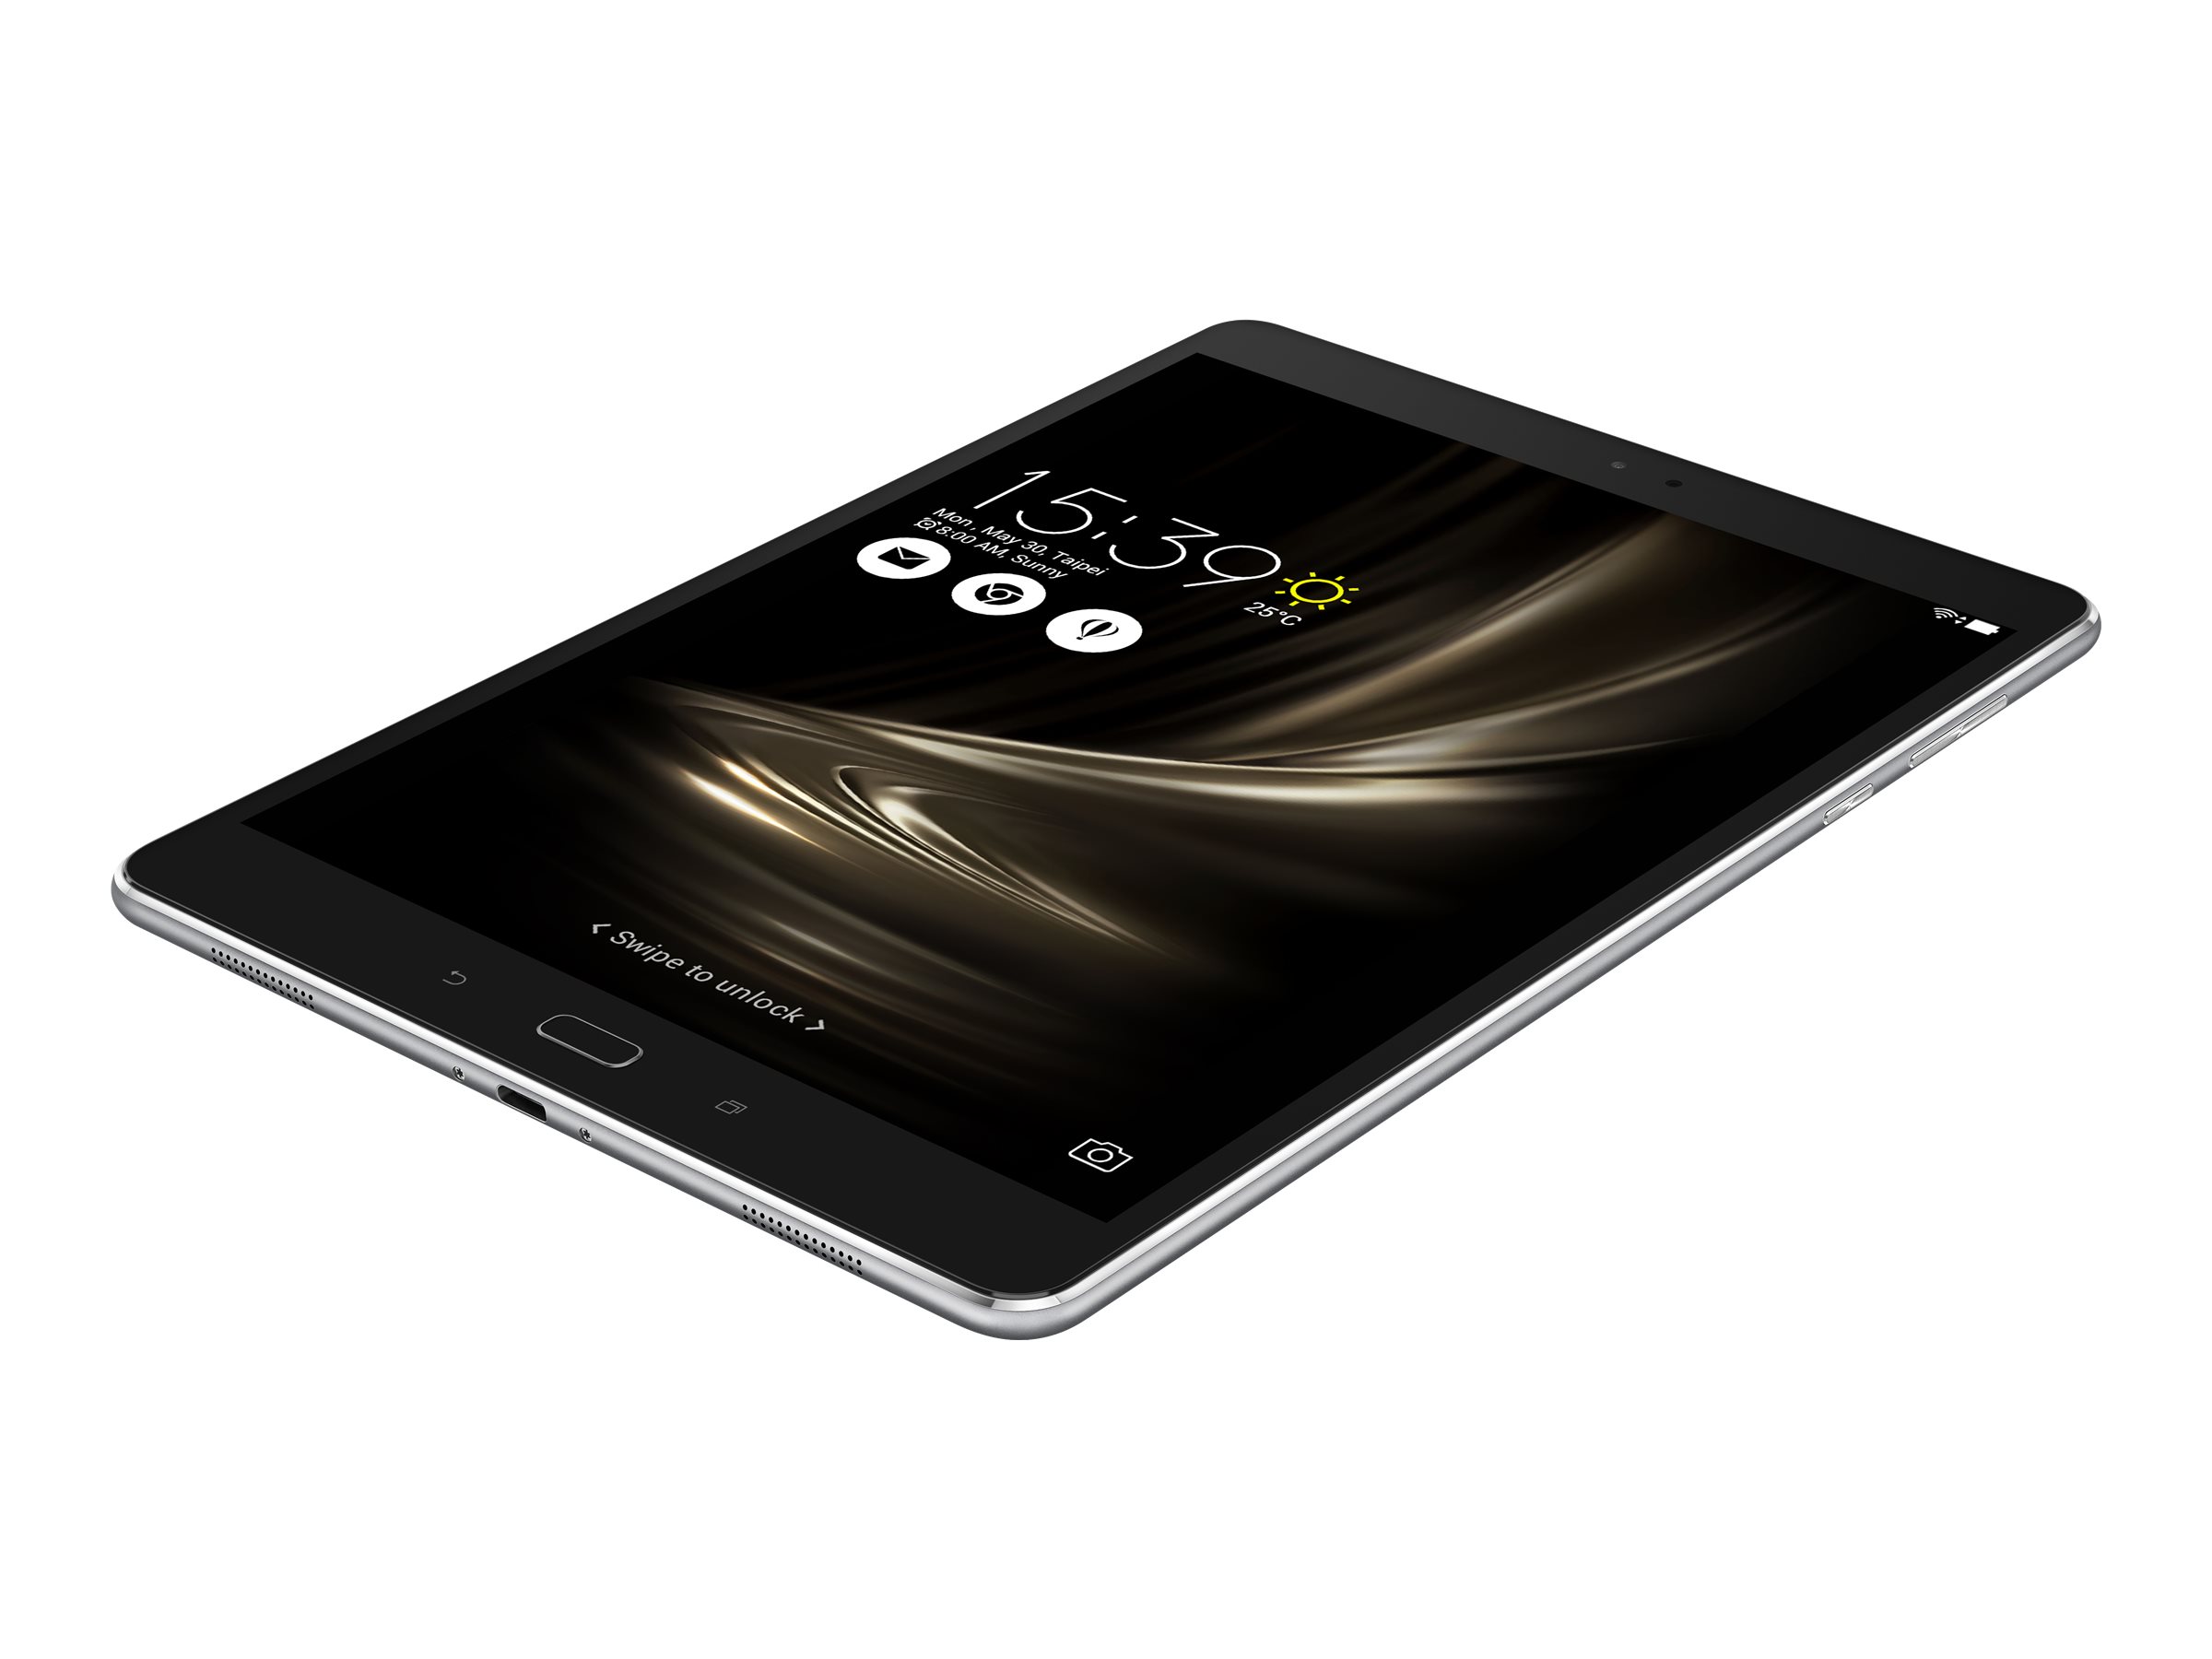 ASUS ZenPad 3S 10 Z500M - Tablet - Android 6.0 (Marshmallow) - 64 GB eMMC - 9.7" IPS (2048 x 1536) - microSD slot - titanium gray - image 3 of 16